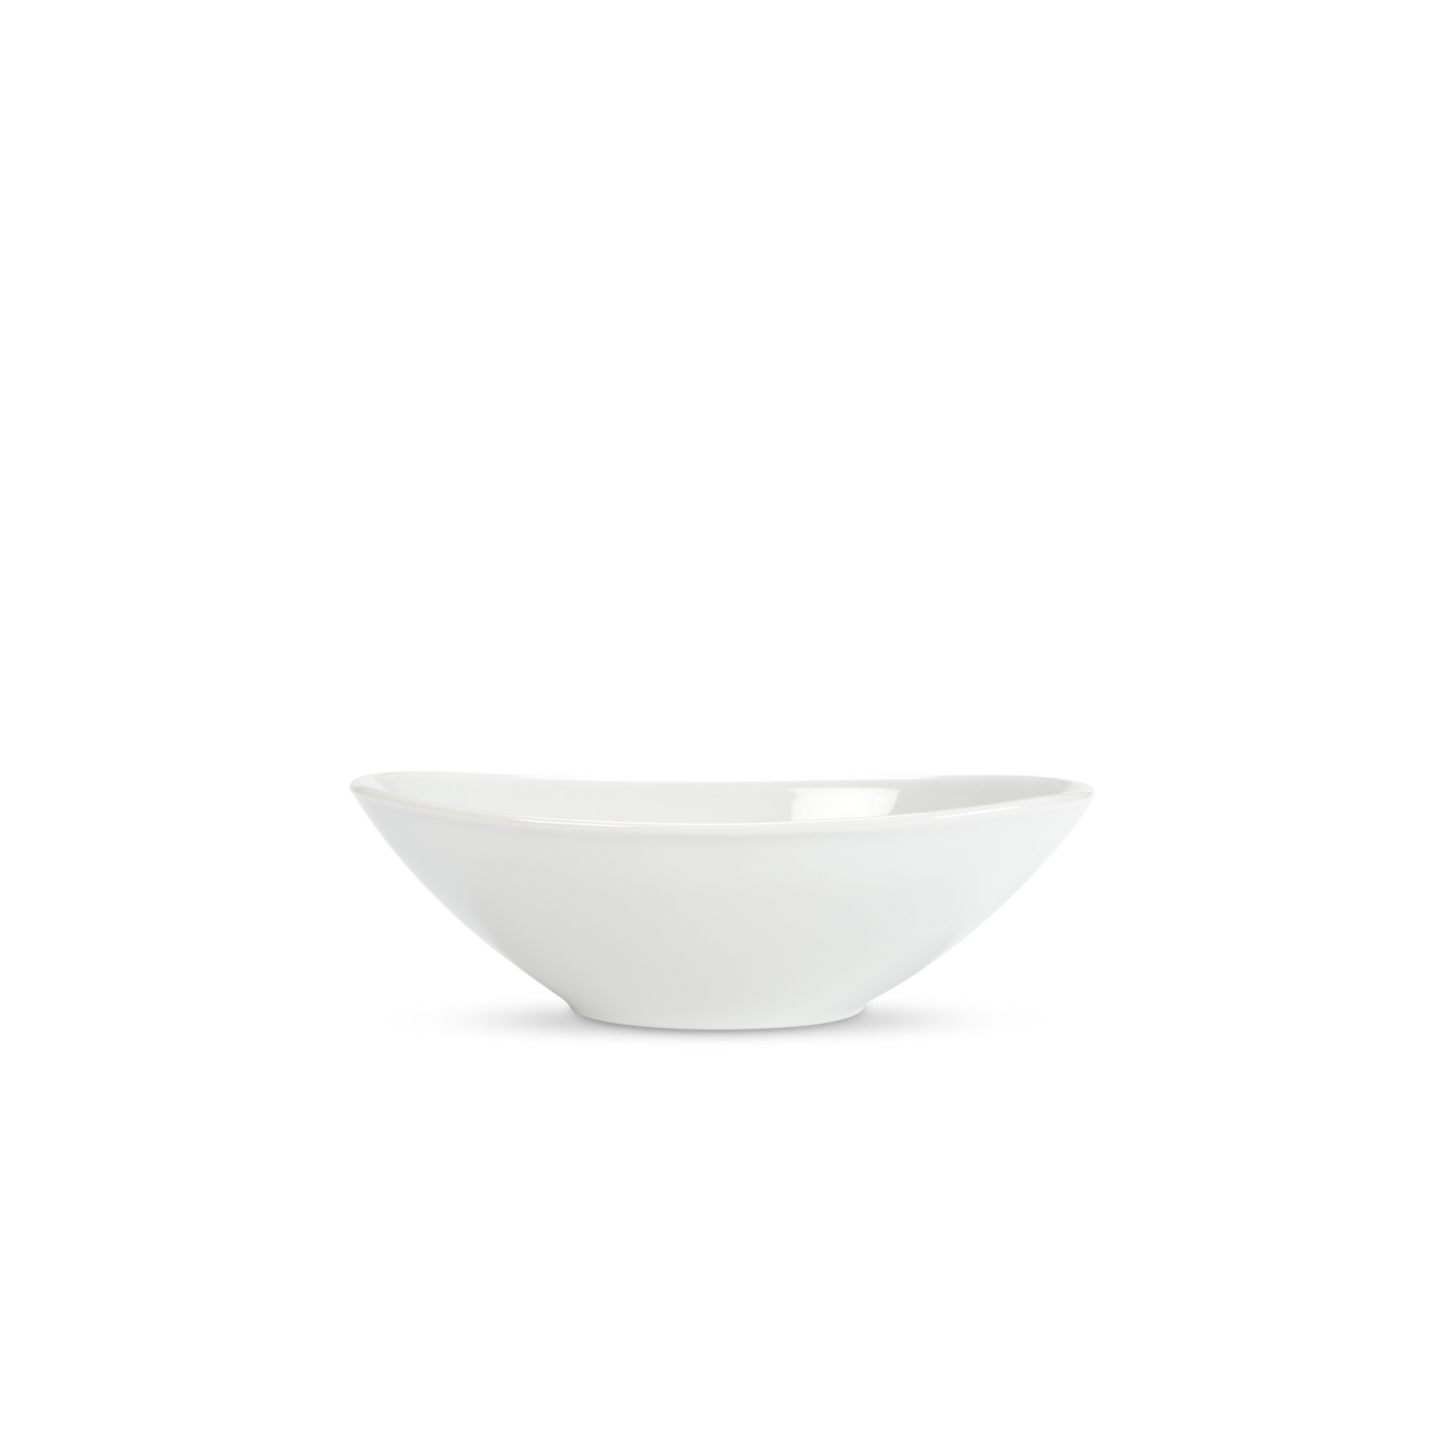 Guacamole/Dip Dish, Set of 2